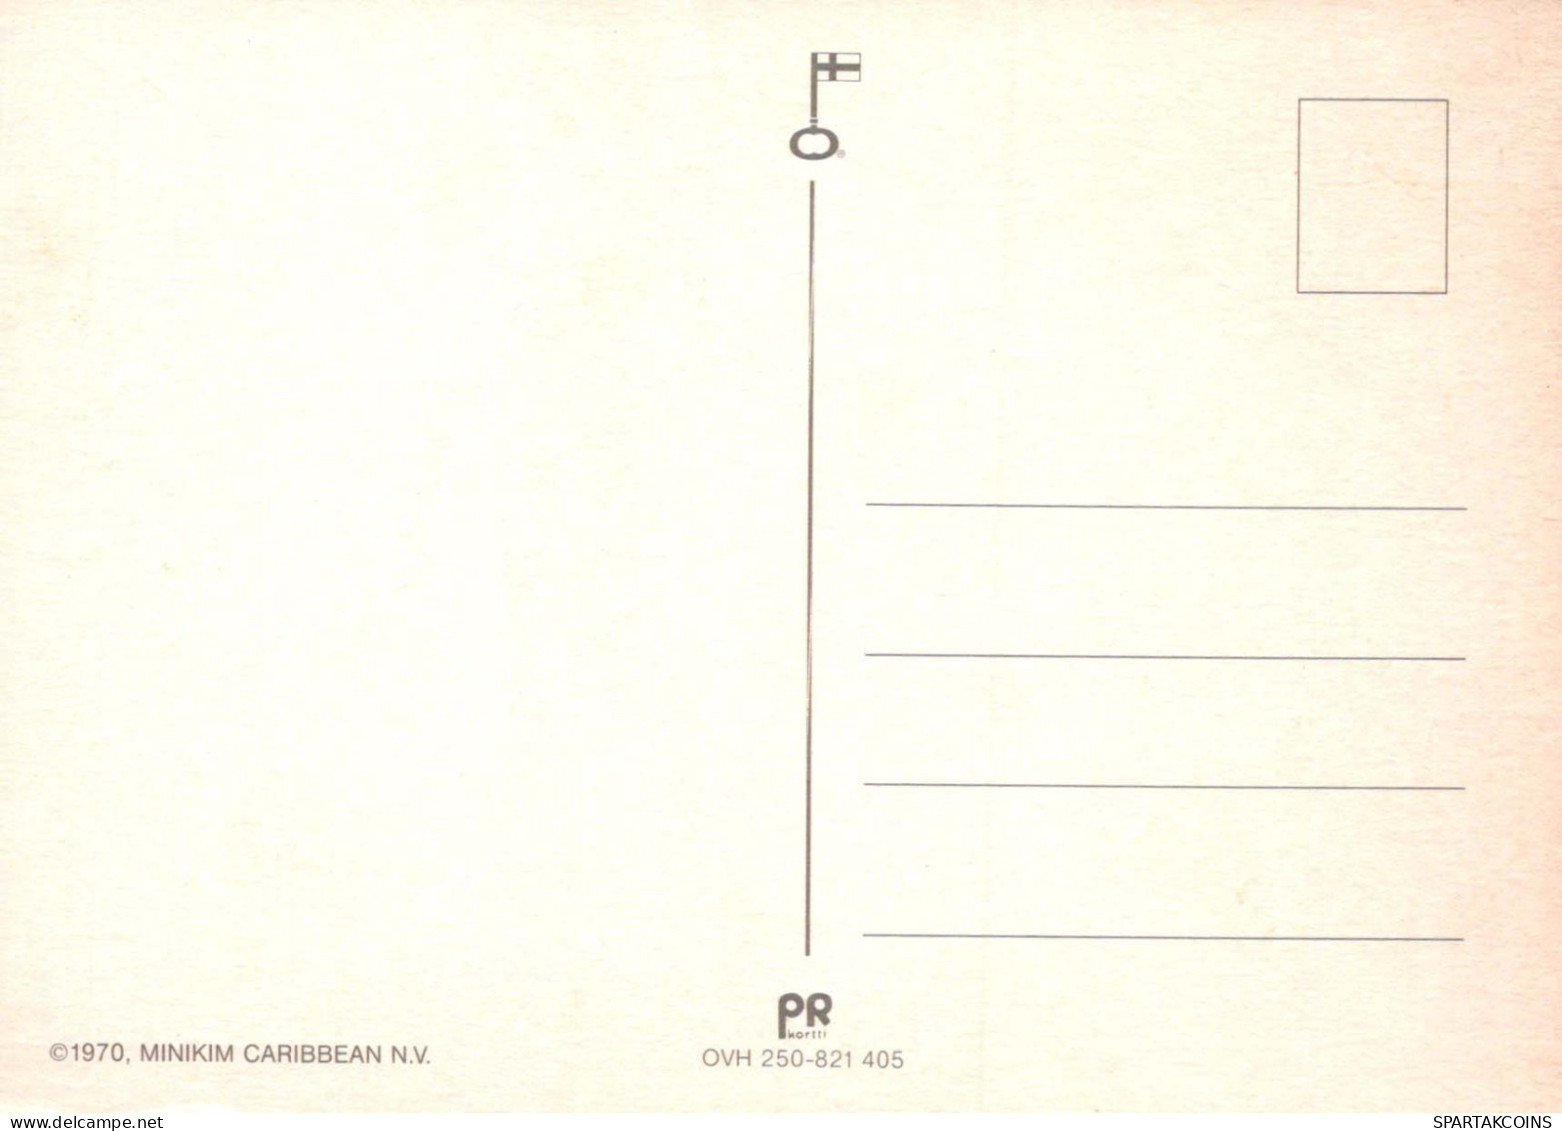 BAMBINO UMORISMO Vintage Cartolina CPSM #PBV425.A - Humorous Cards